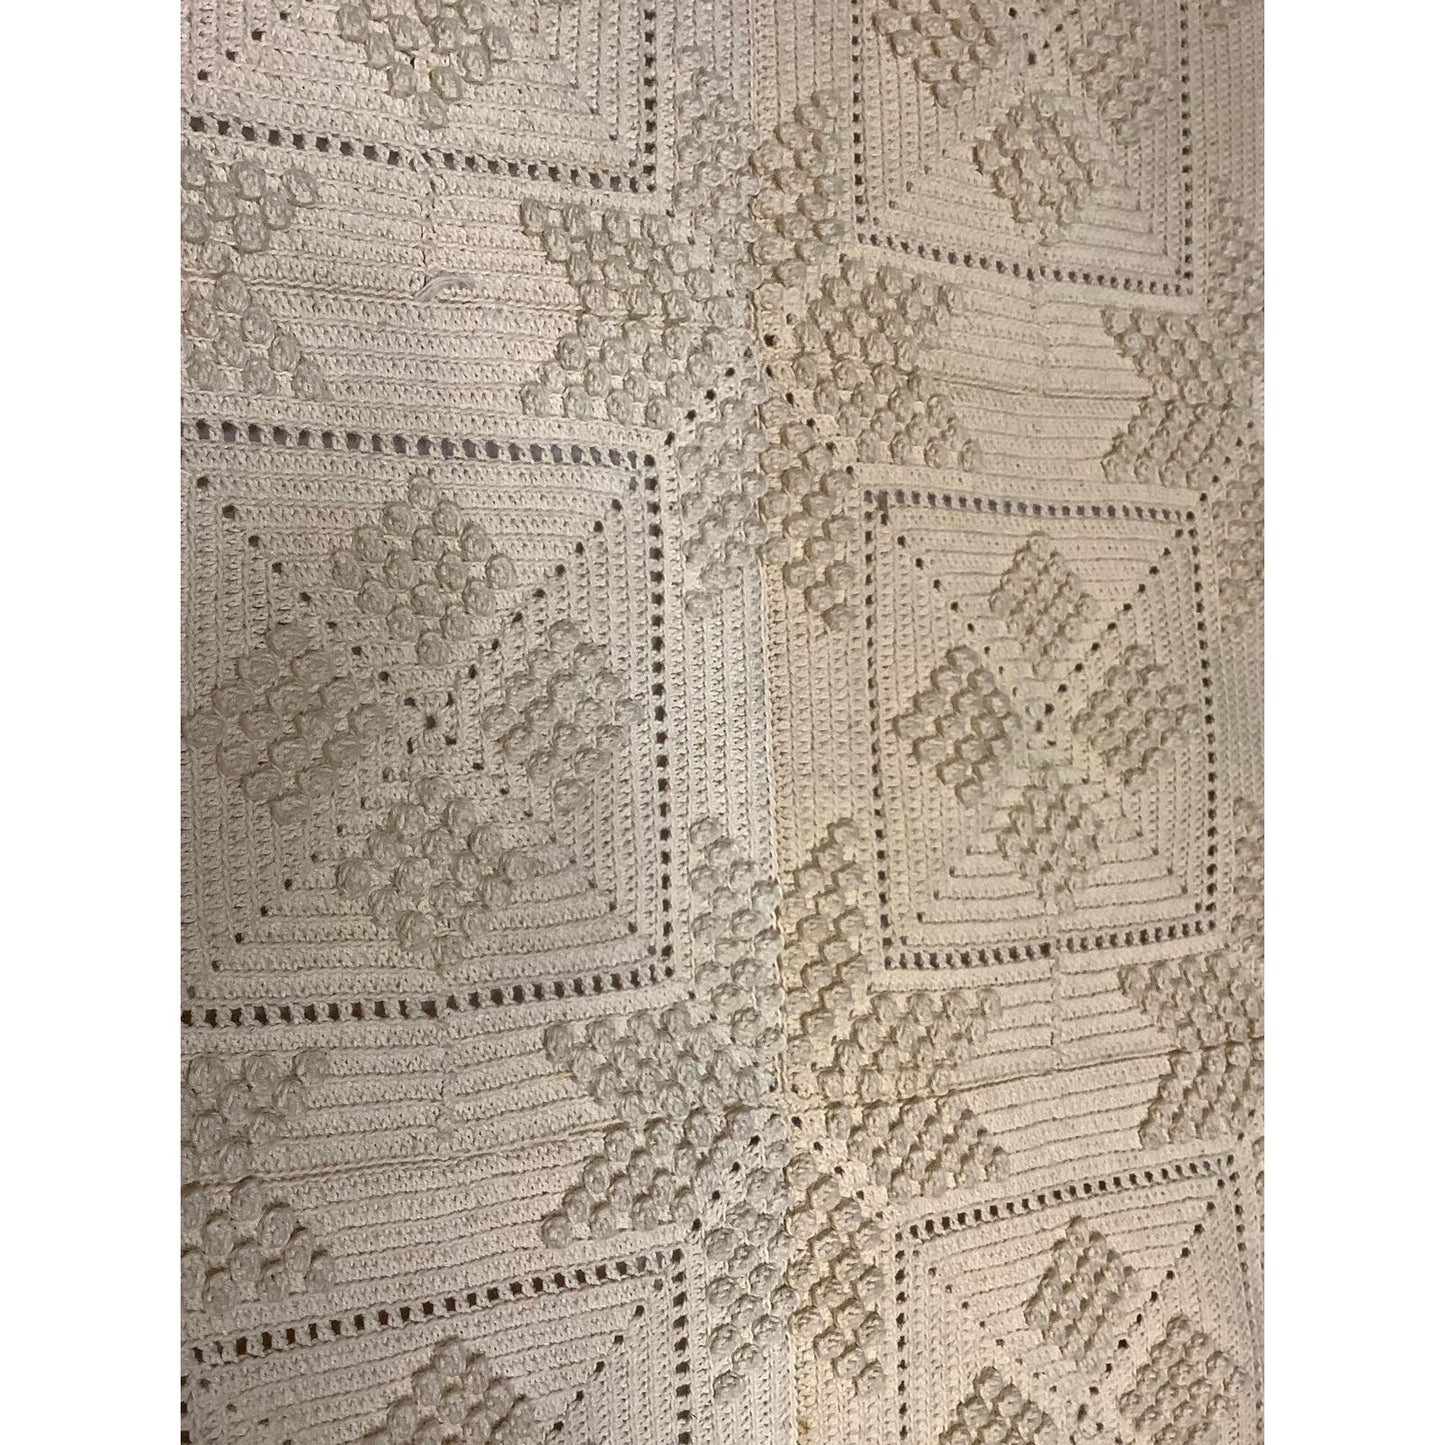 Vtg Handmade Heavy Cotton Blanket Star Pattern Popcorn Knit Triangle 90” x 58”